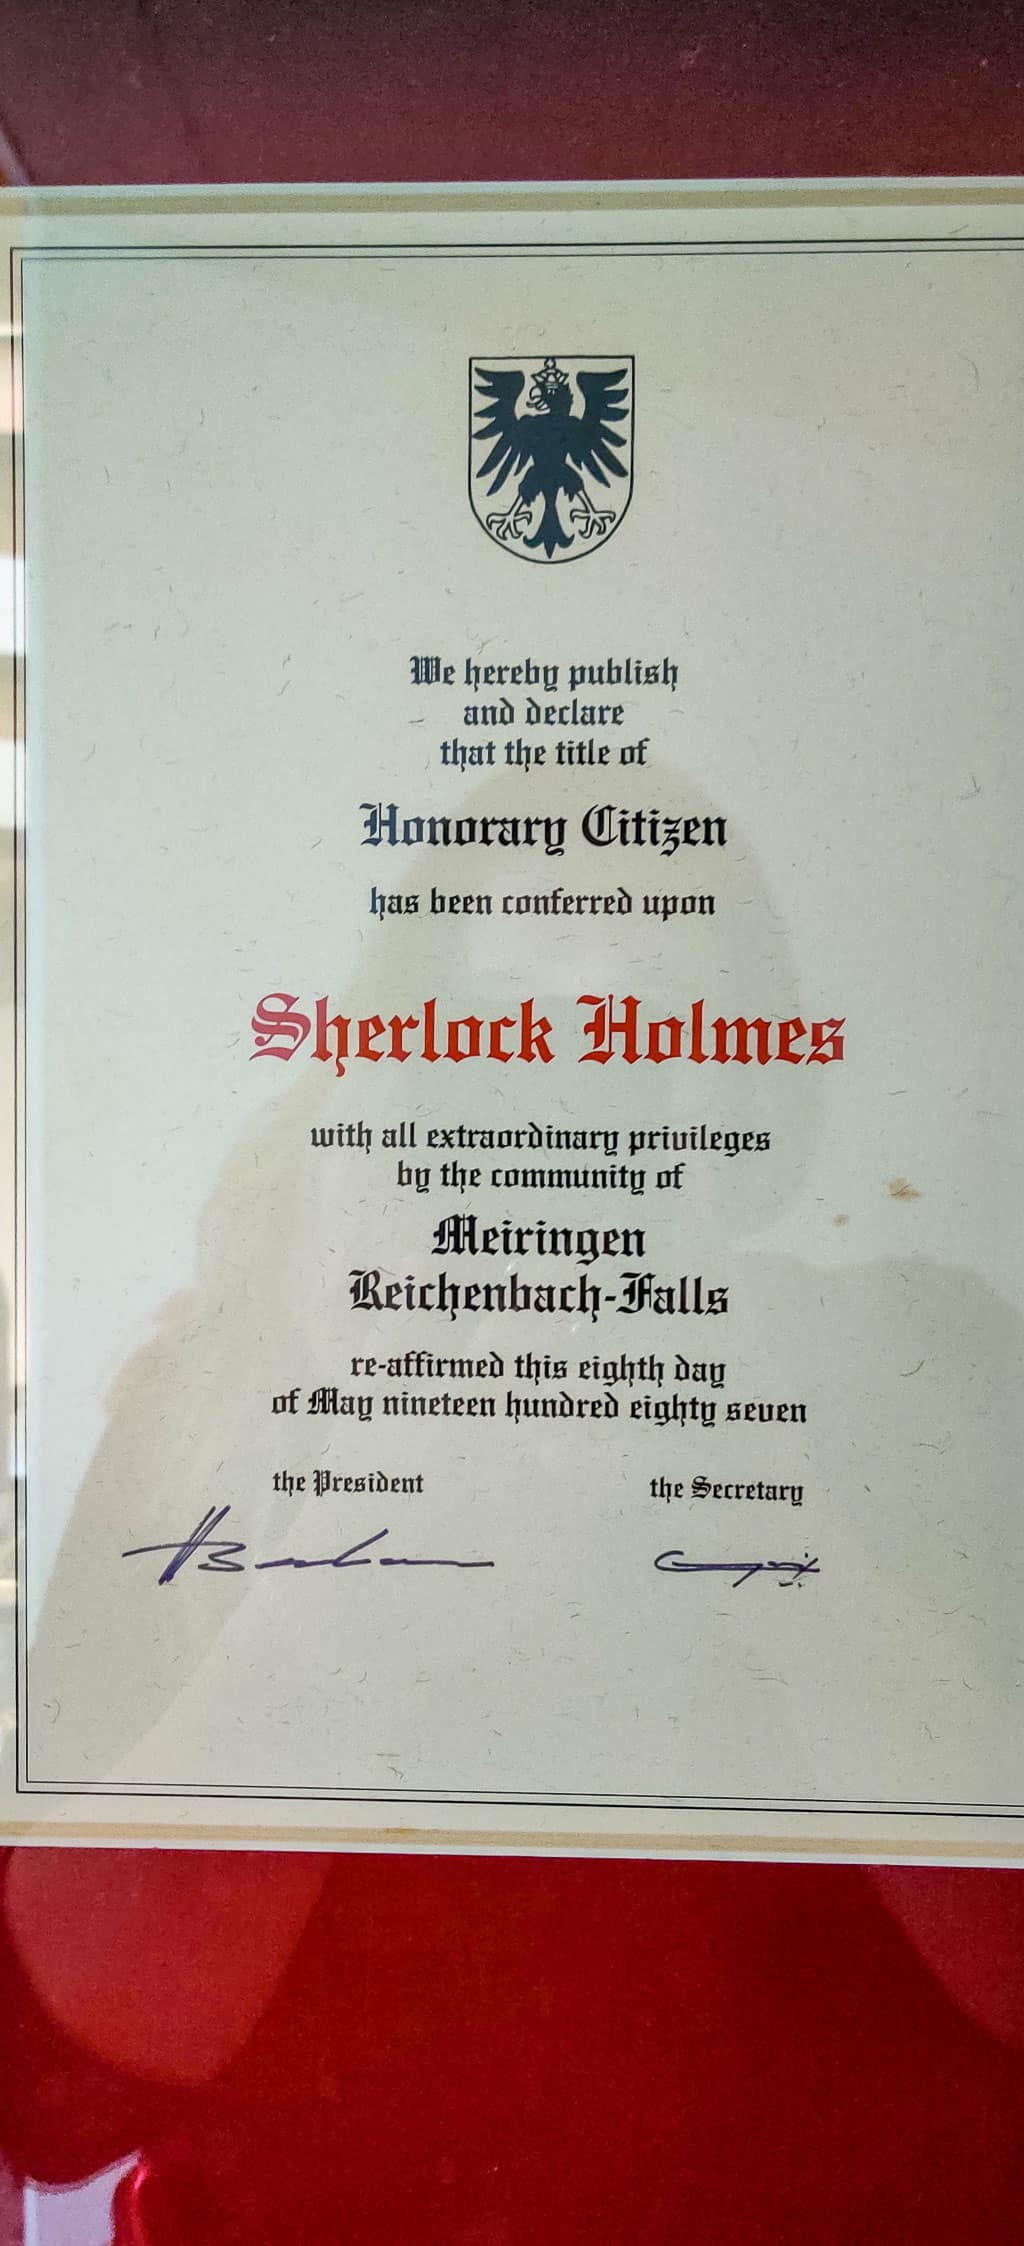 Sherlock Holmes Museum Details